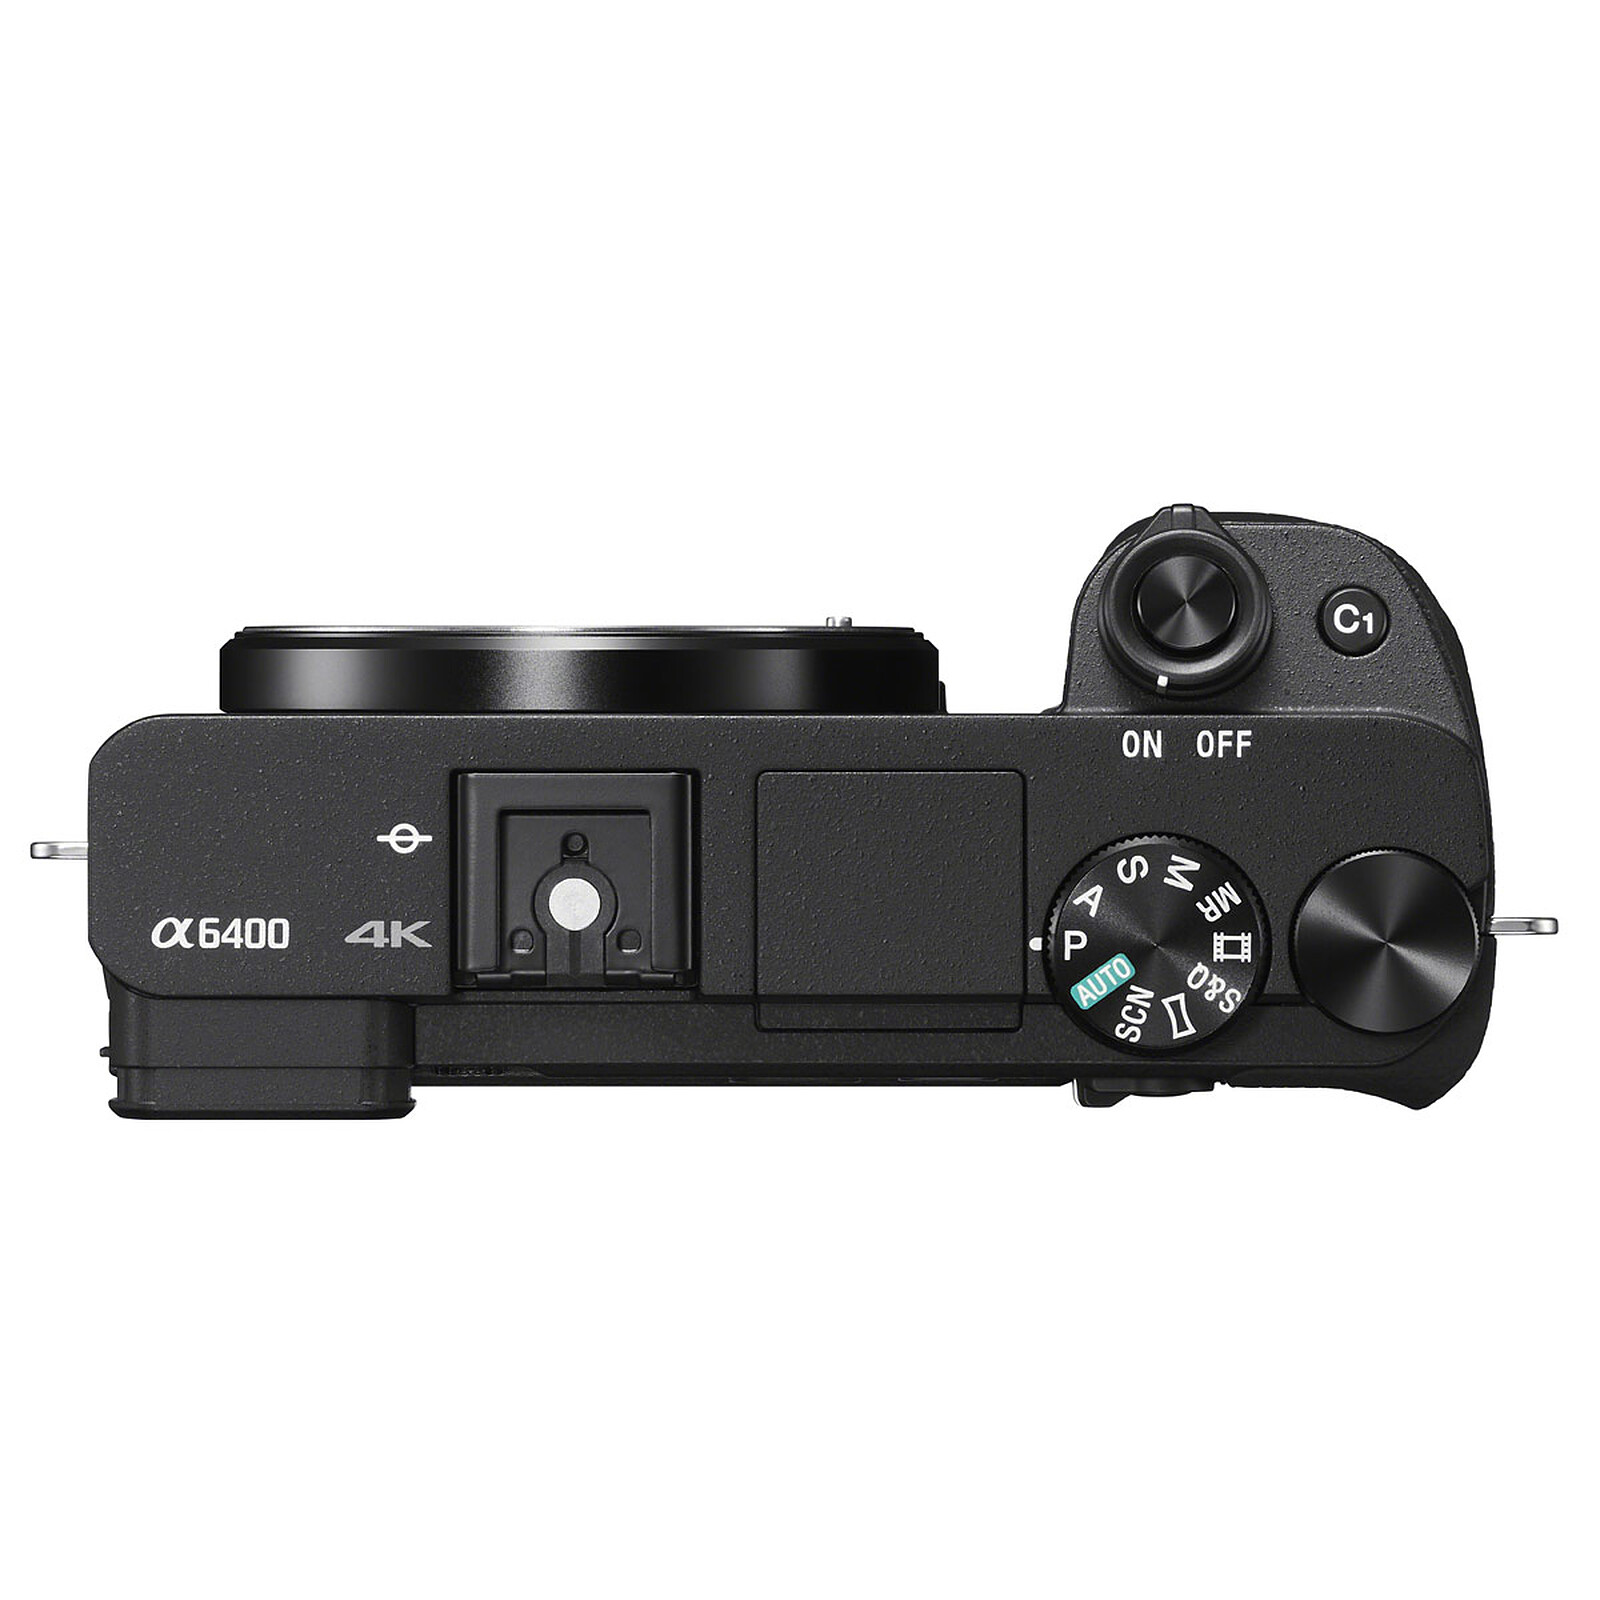 Sony Alpha ILCE-6400 + 16-50mm OSS black - Foto Erhardt